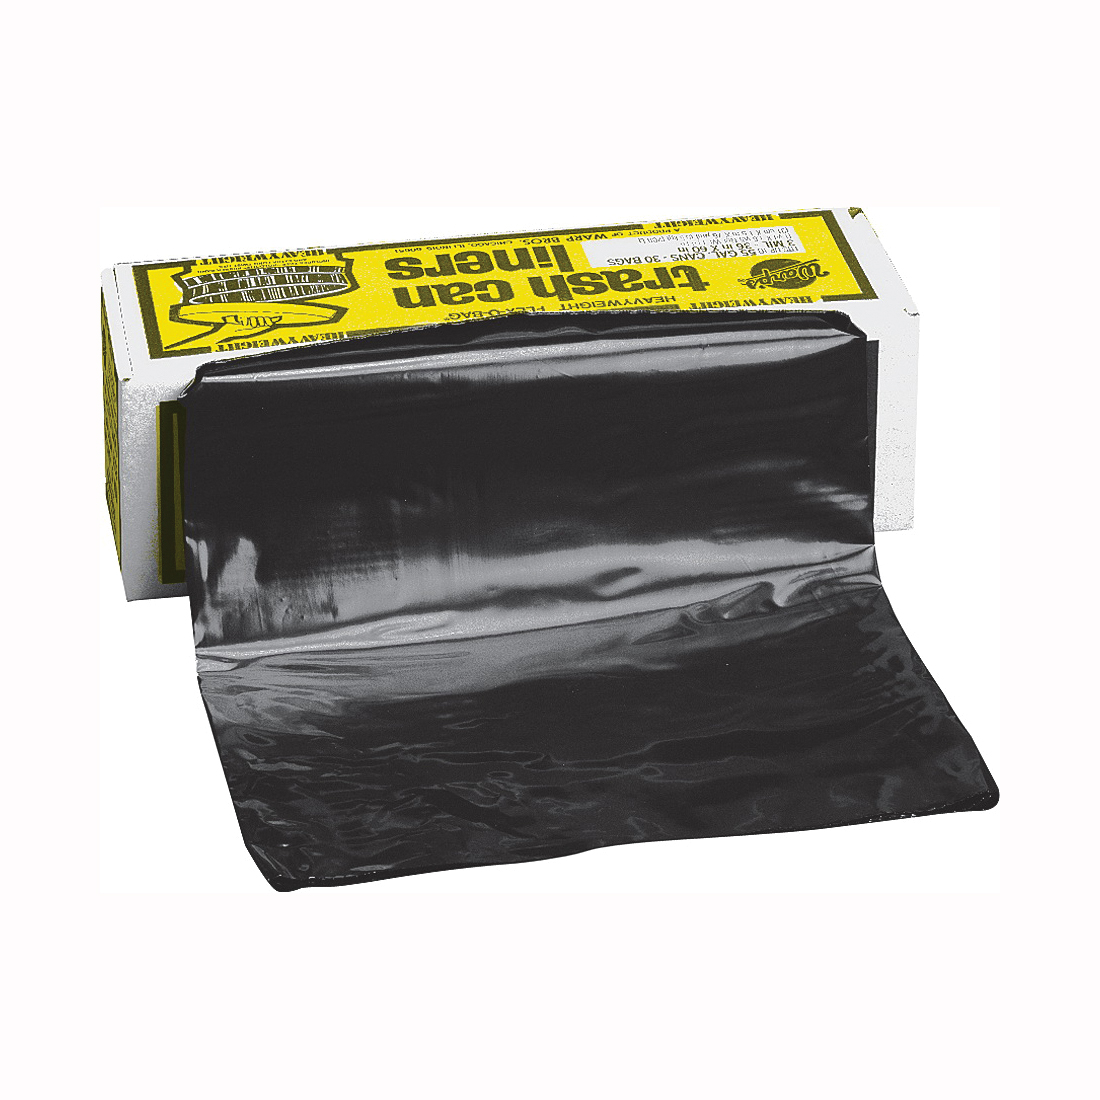 FLEX-O-BAG HB55-30 Trash Can Liner, 55 gal Capacity, Plastic, Black